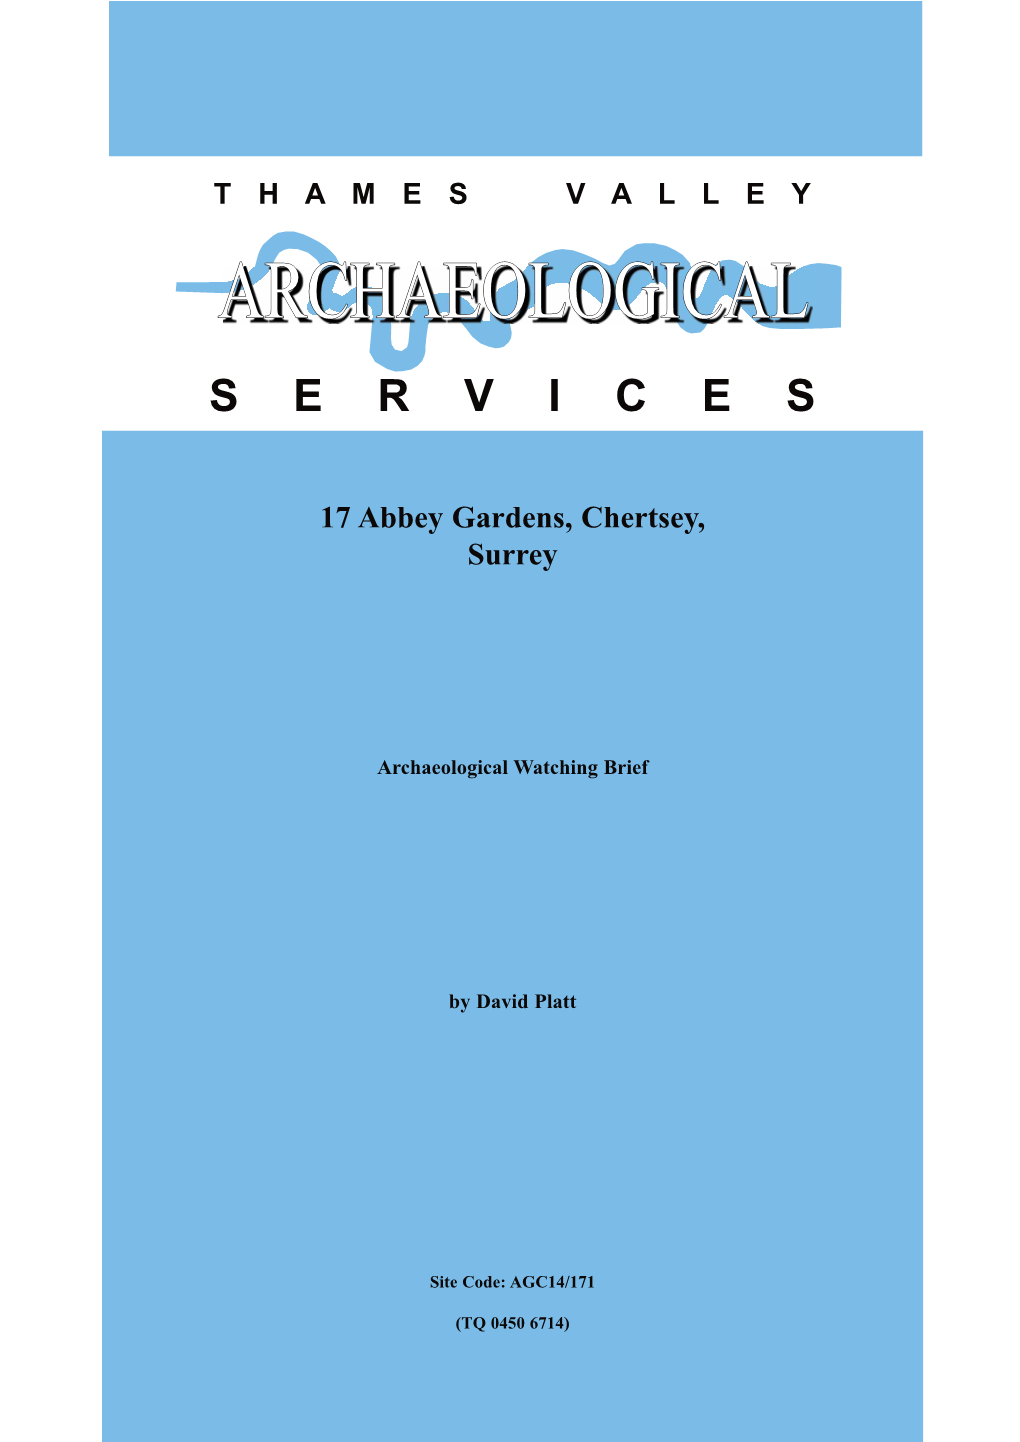 Thames Valley Archaeological Services Ltd, 47-49 De Beauvoir Road, Reading, Berkshire, RG1 5NR